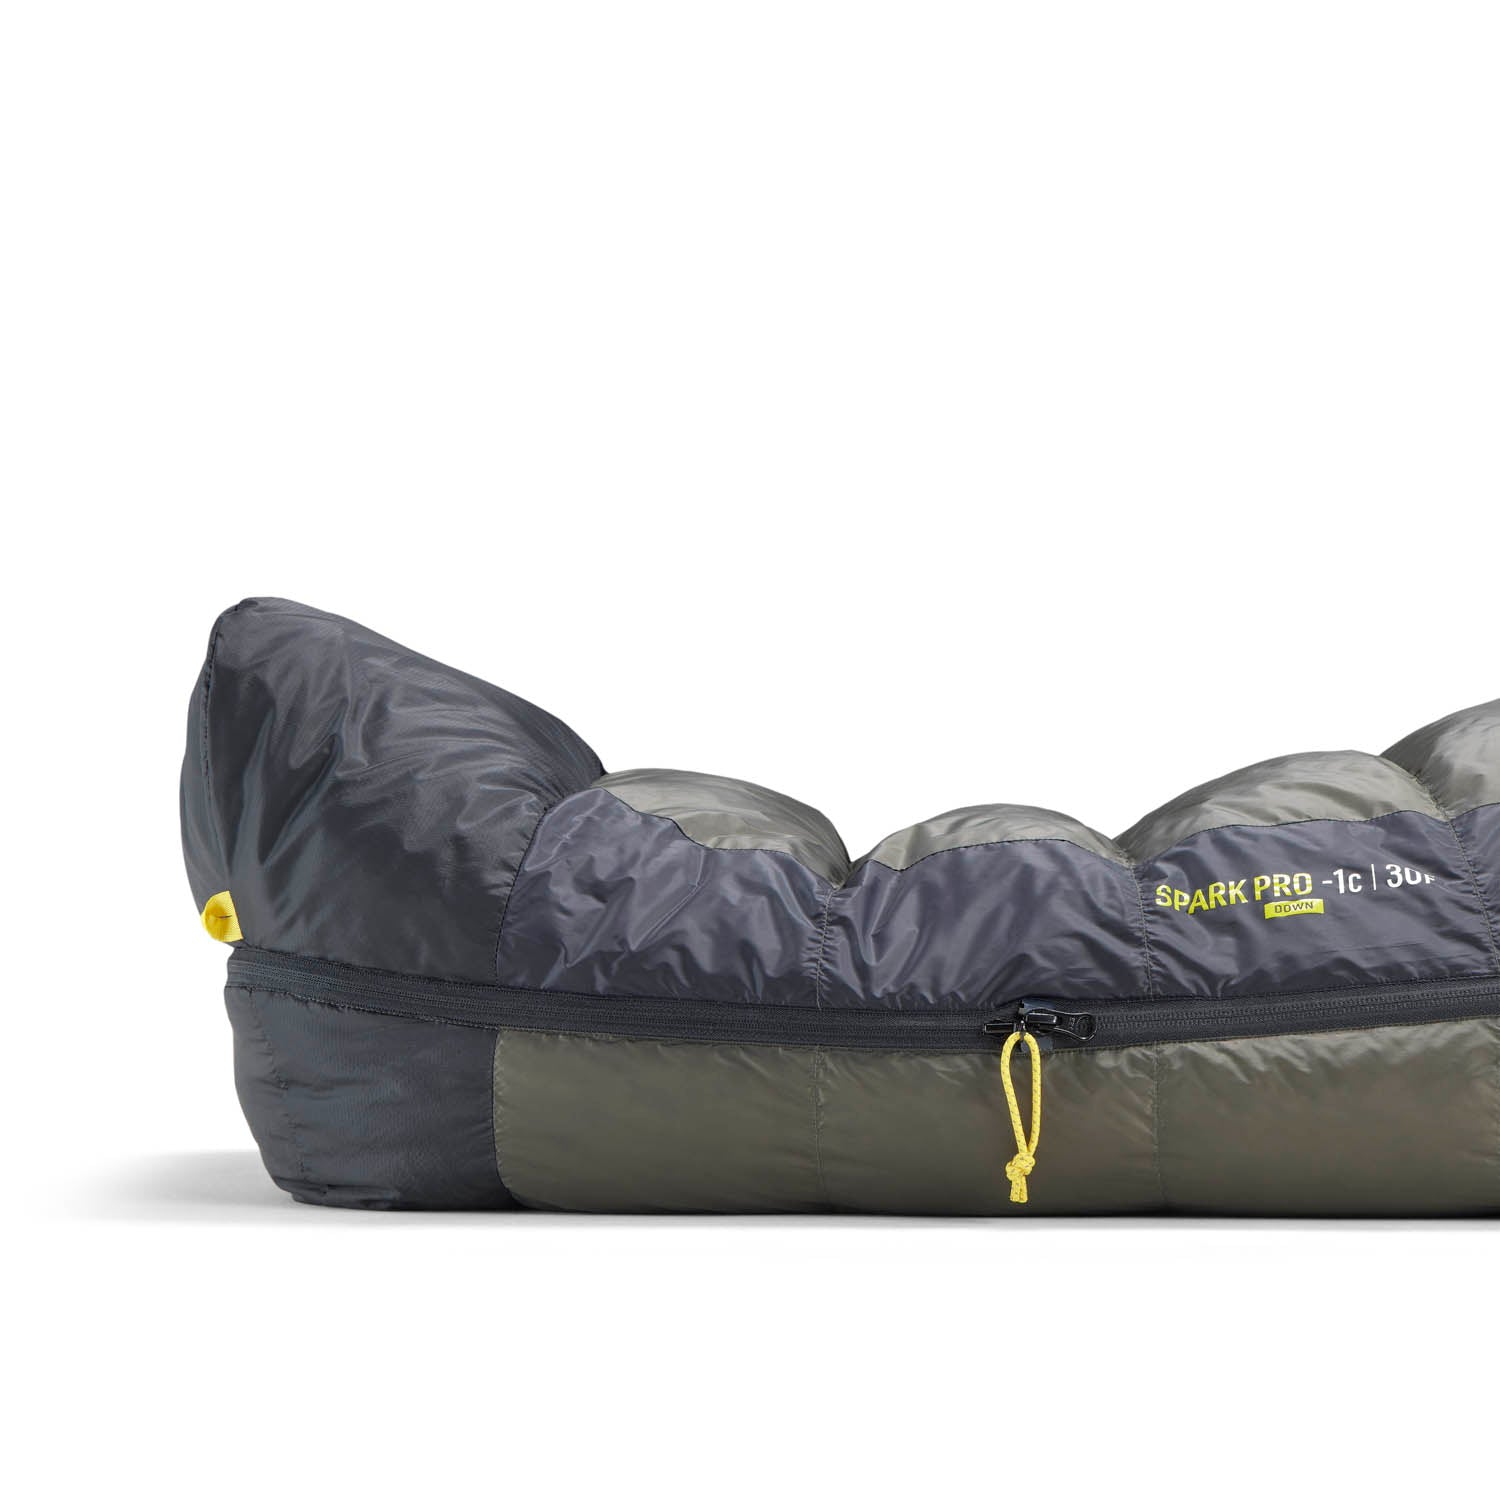 Spark Pro Down Sleeping Bag (15°F & 30°F)